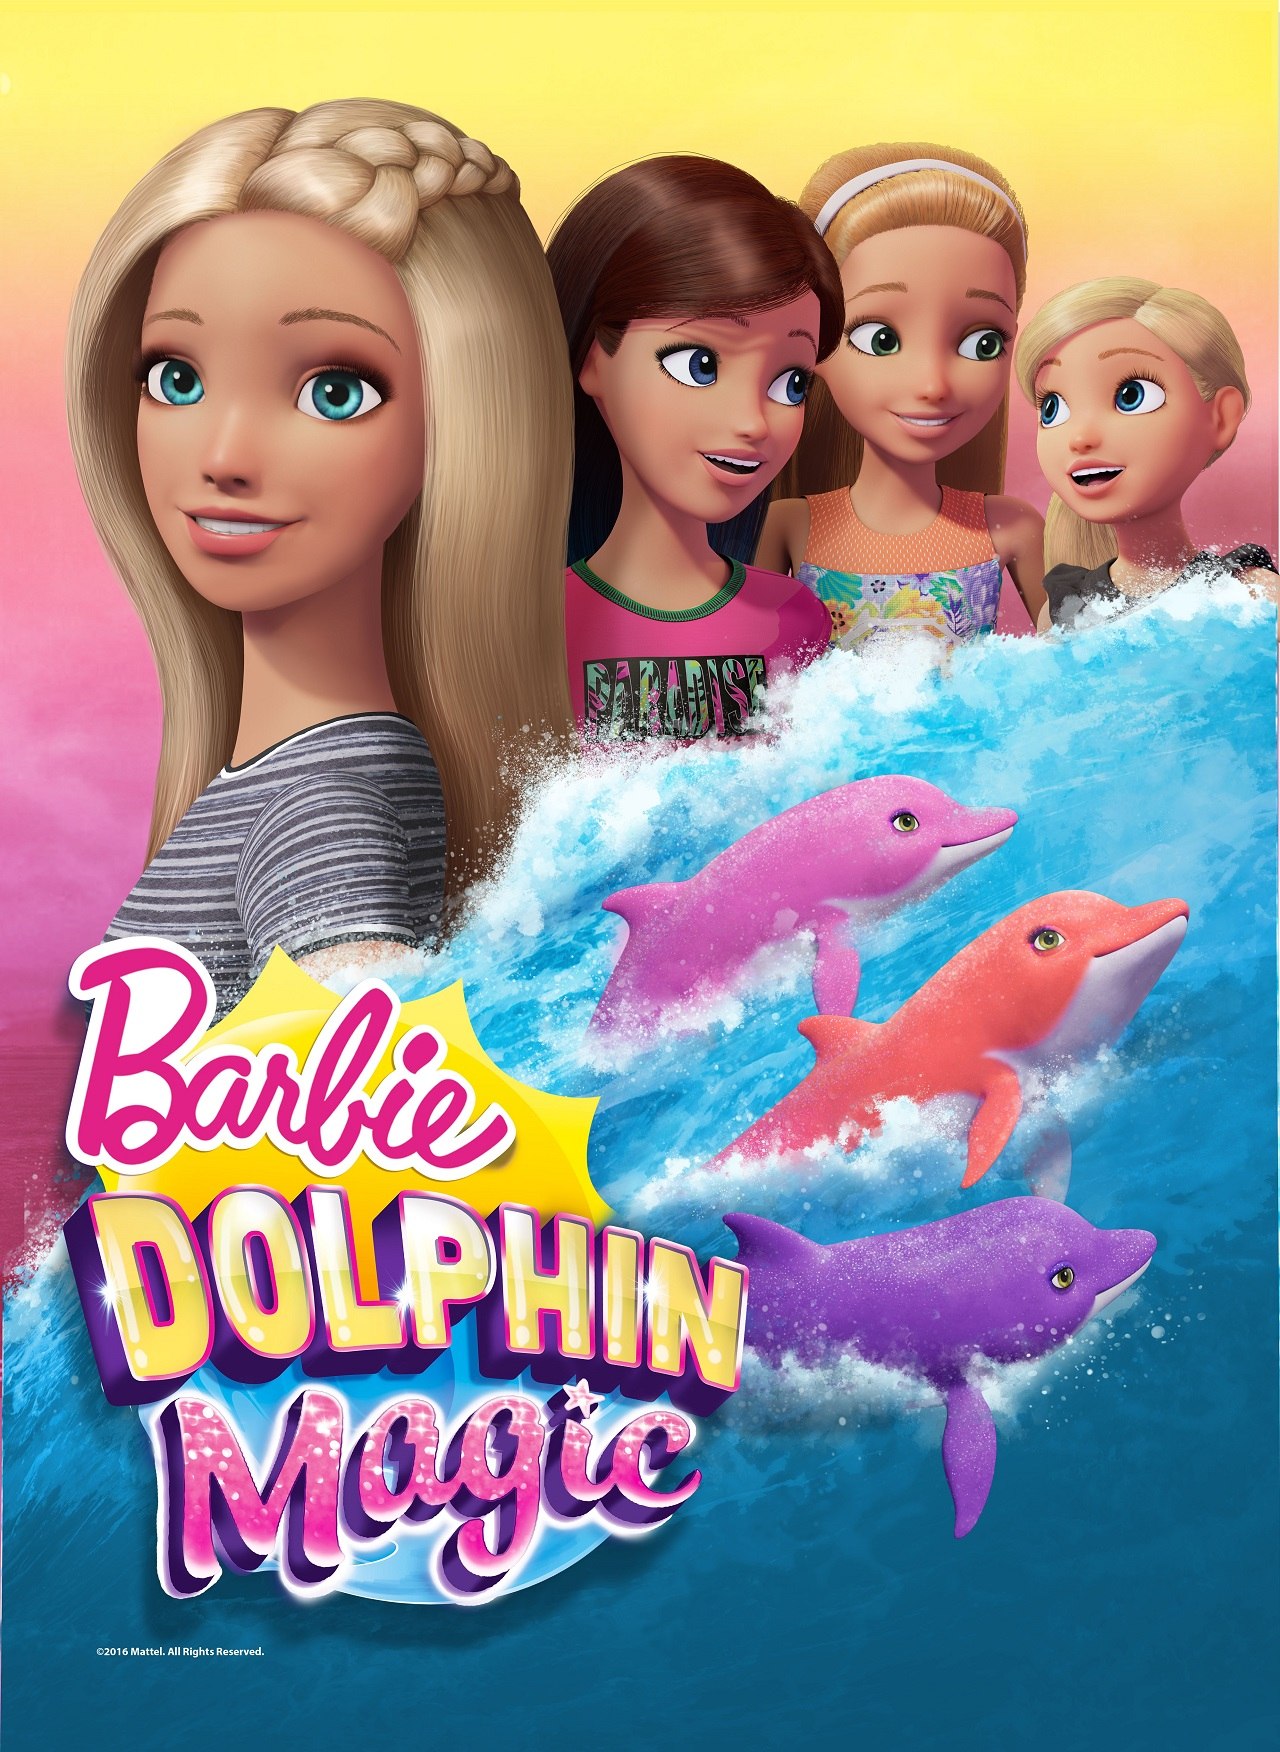 barbie dreamtopia sweetville princess